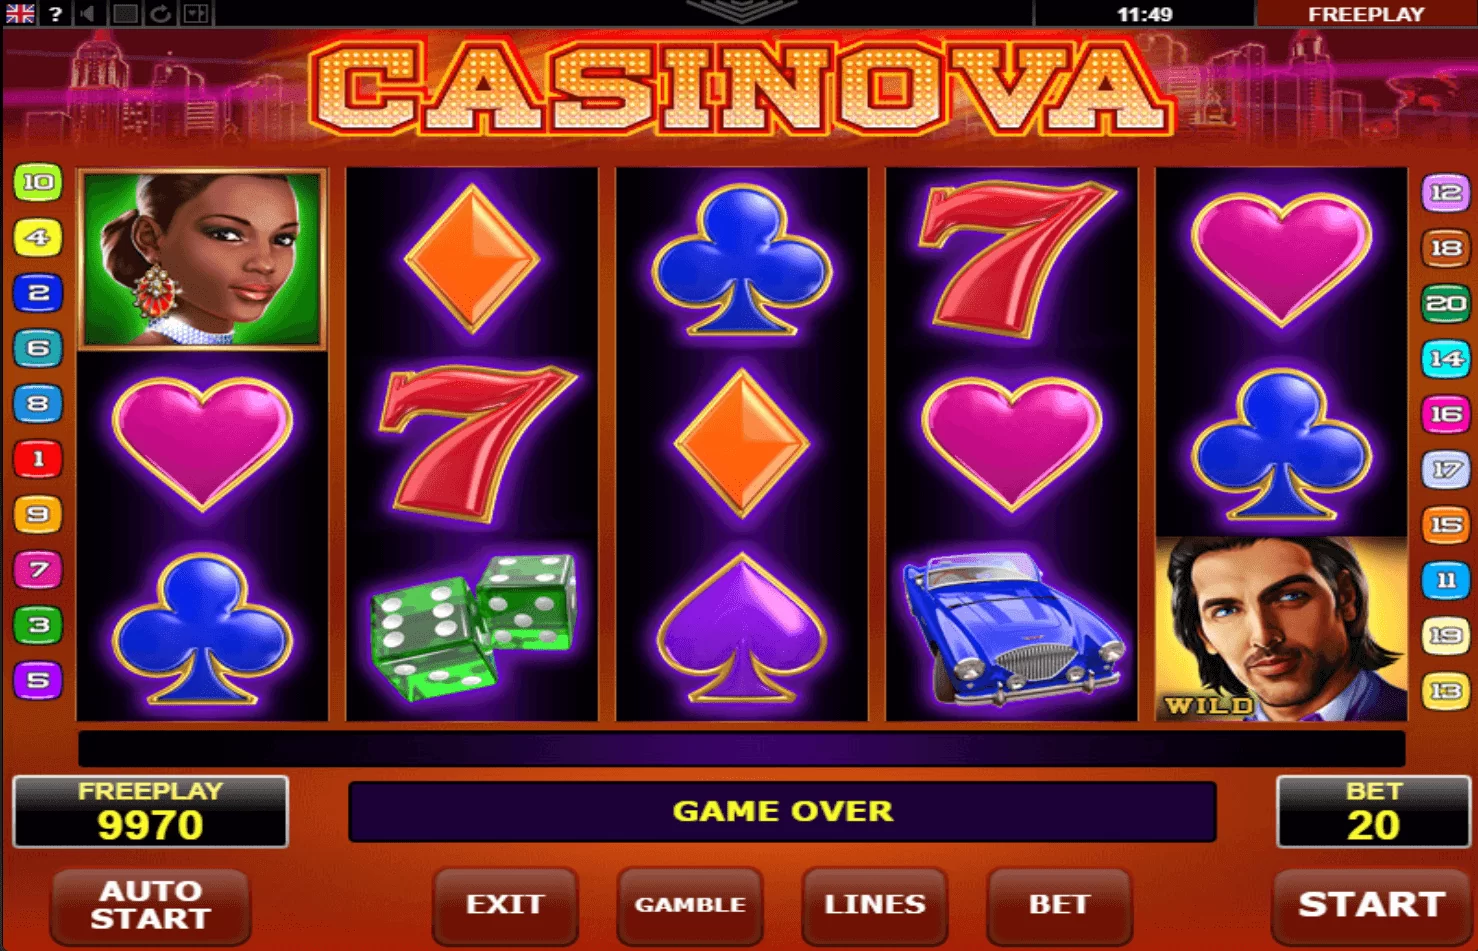 Casinova slot: Play with $100 Free Bonus! | YummySpins